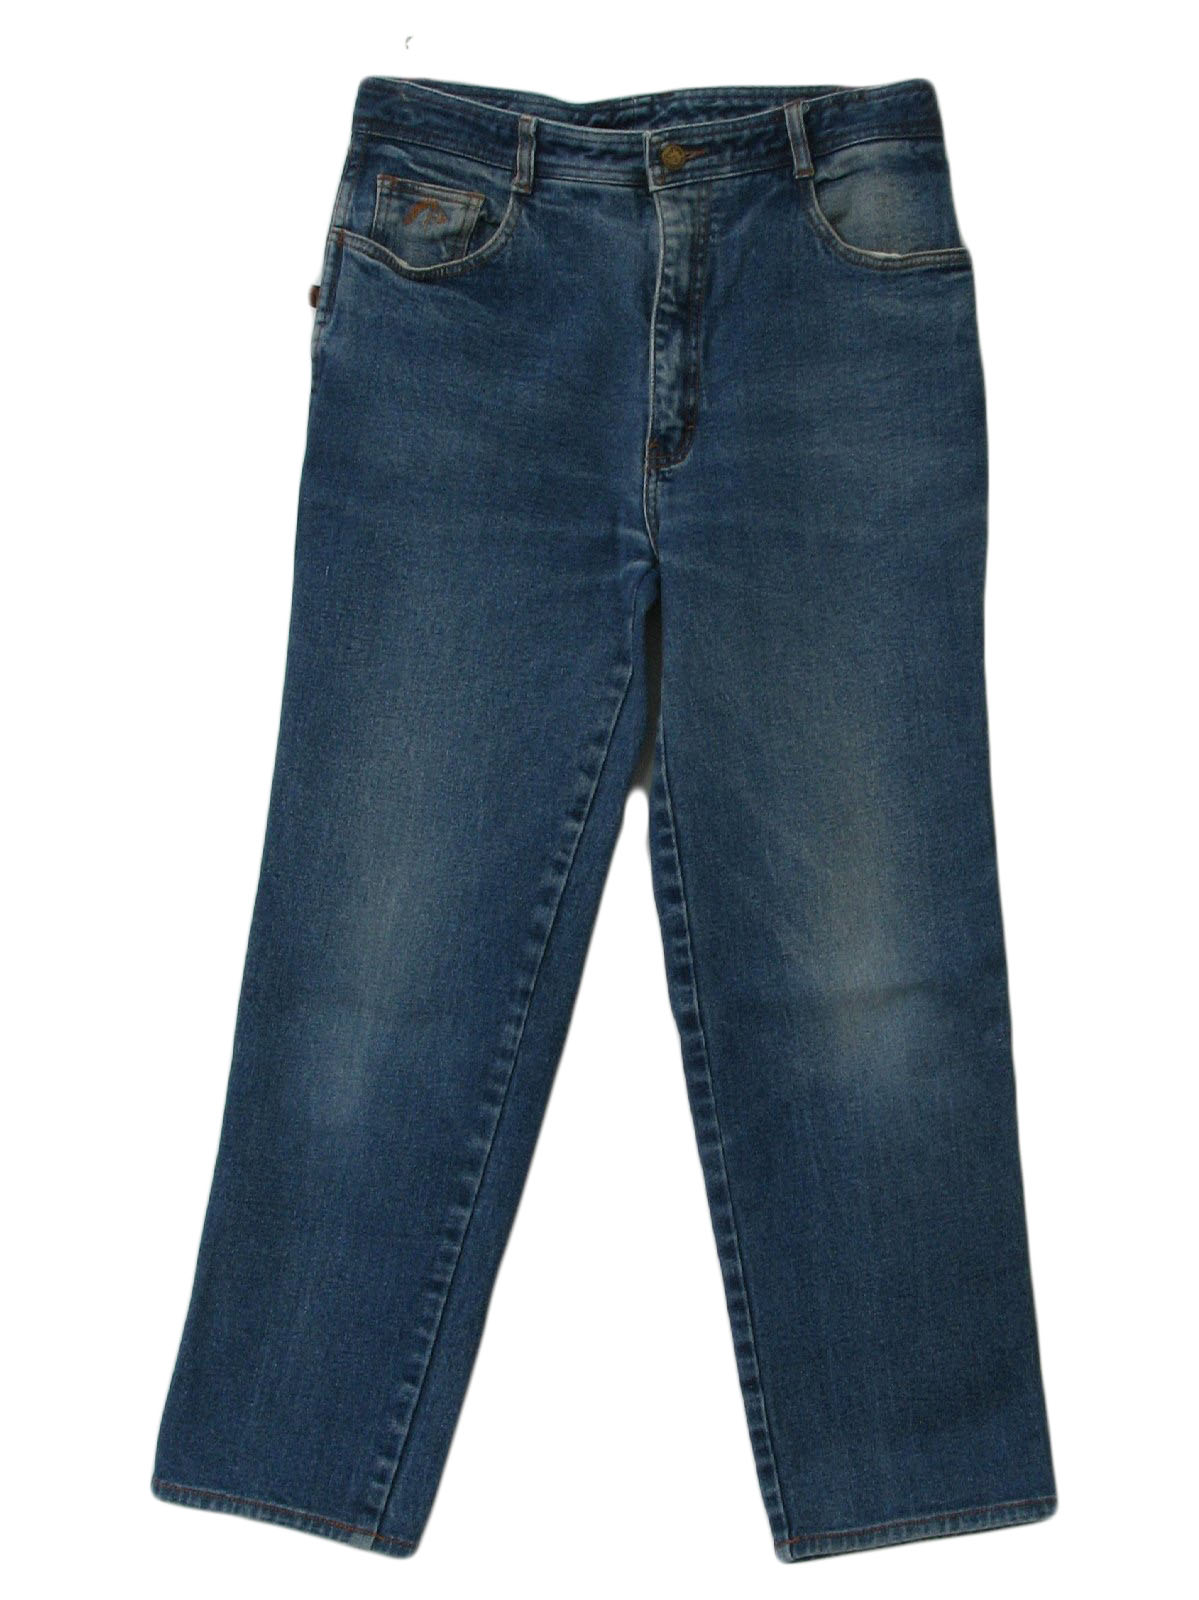 jordache jeans - AOL Image Search Results